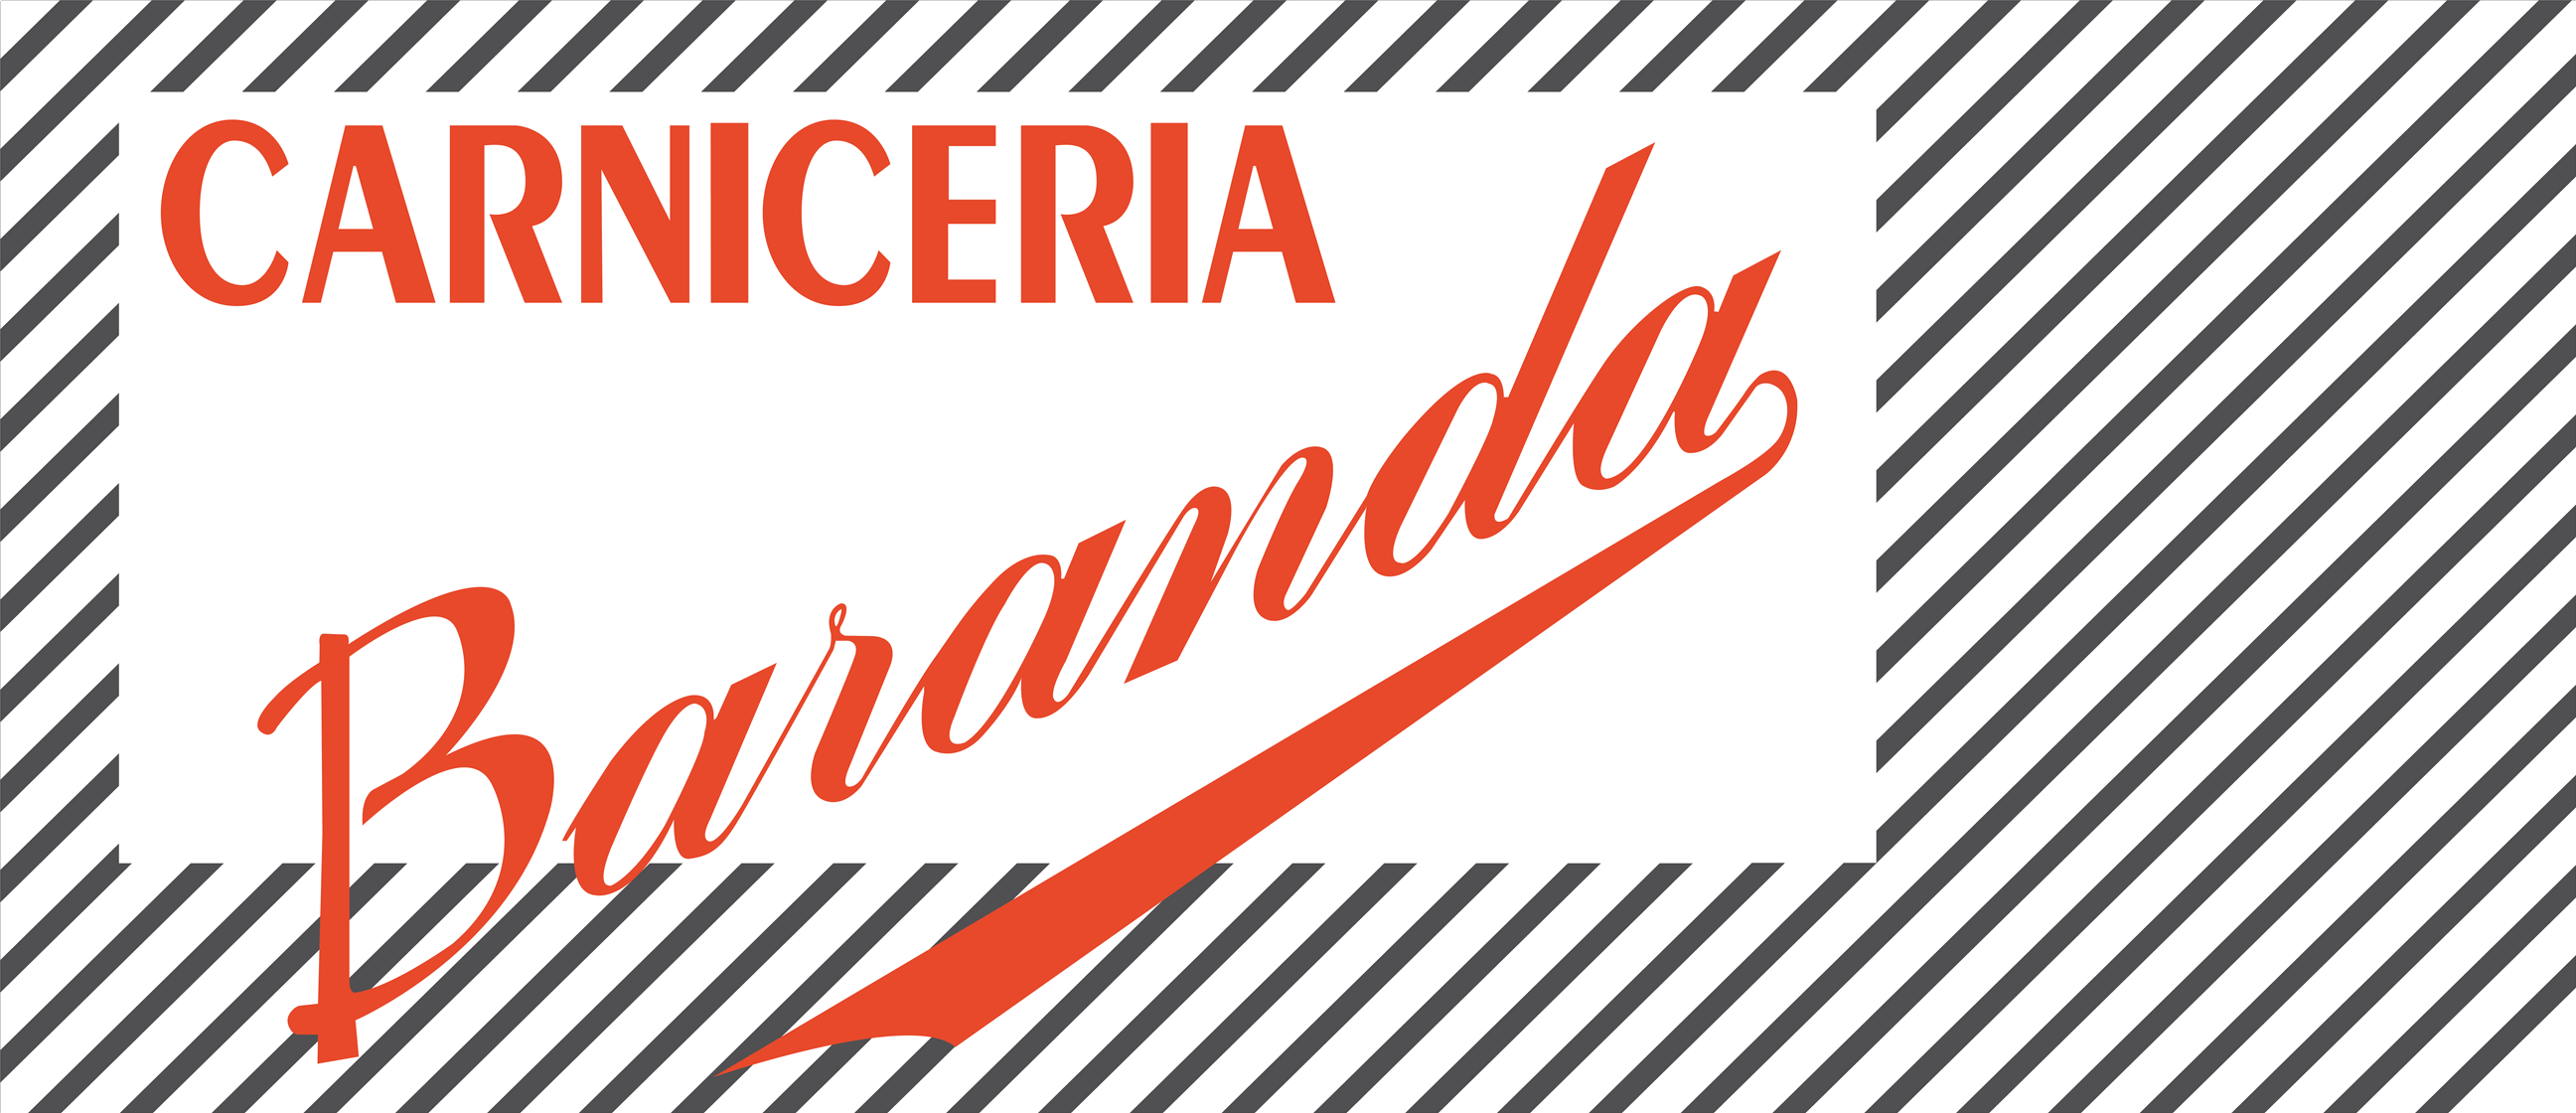 Carniceria Baranda